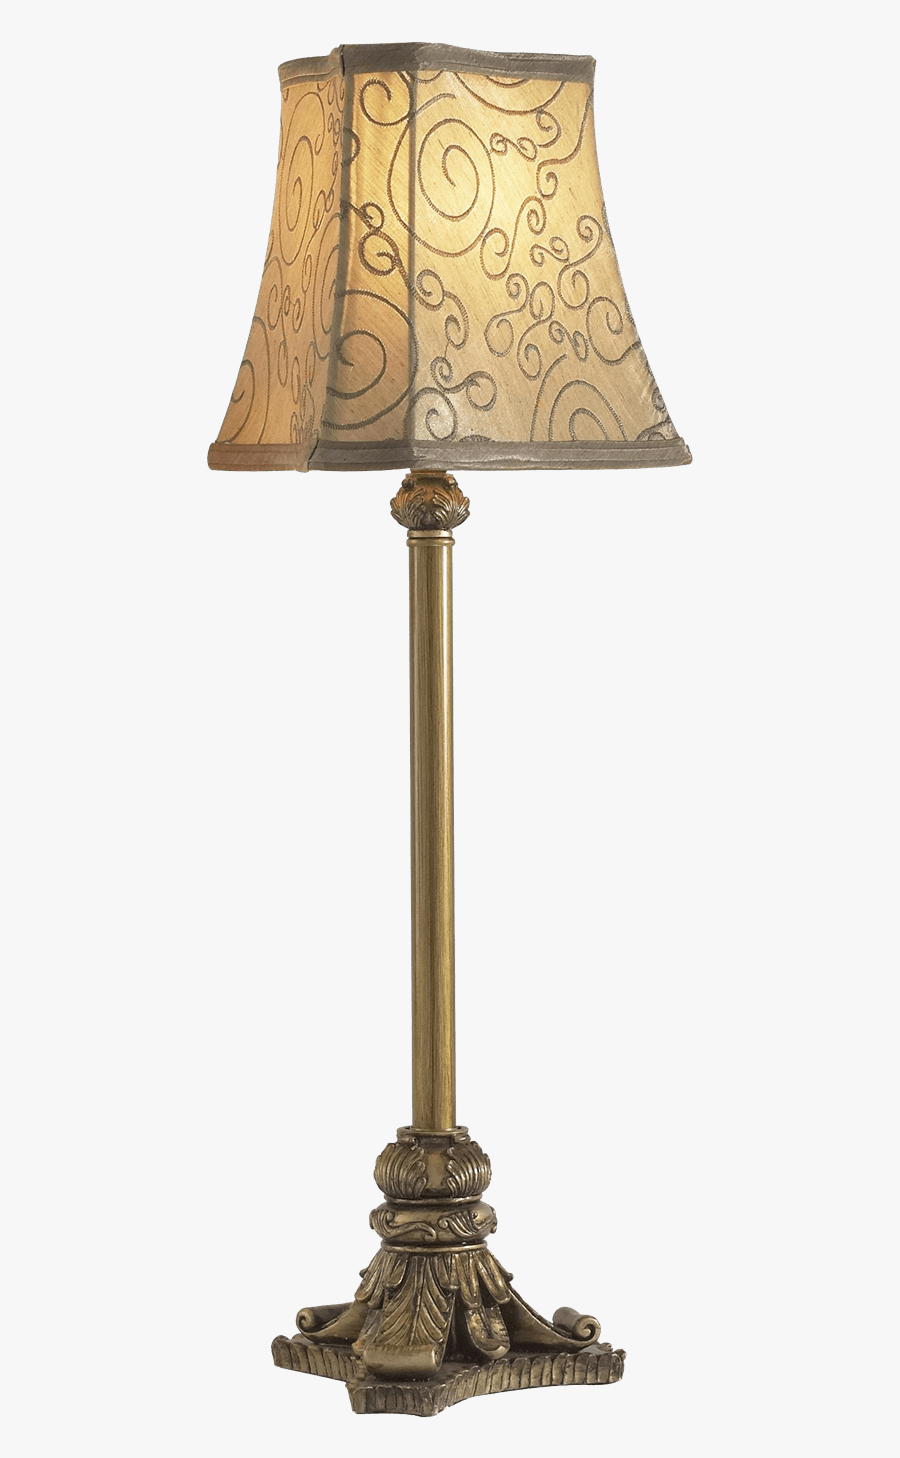 Lamp Vintage Table - Table Lamp Png, Transparent Clipart